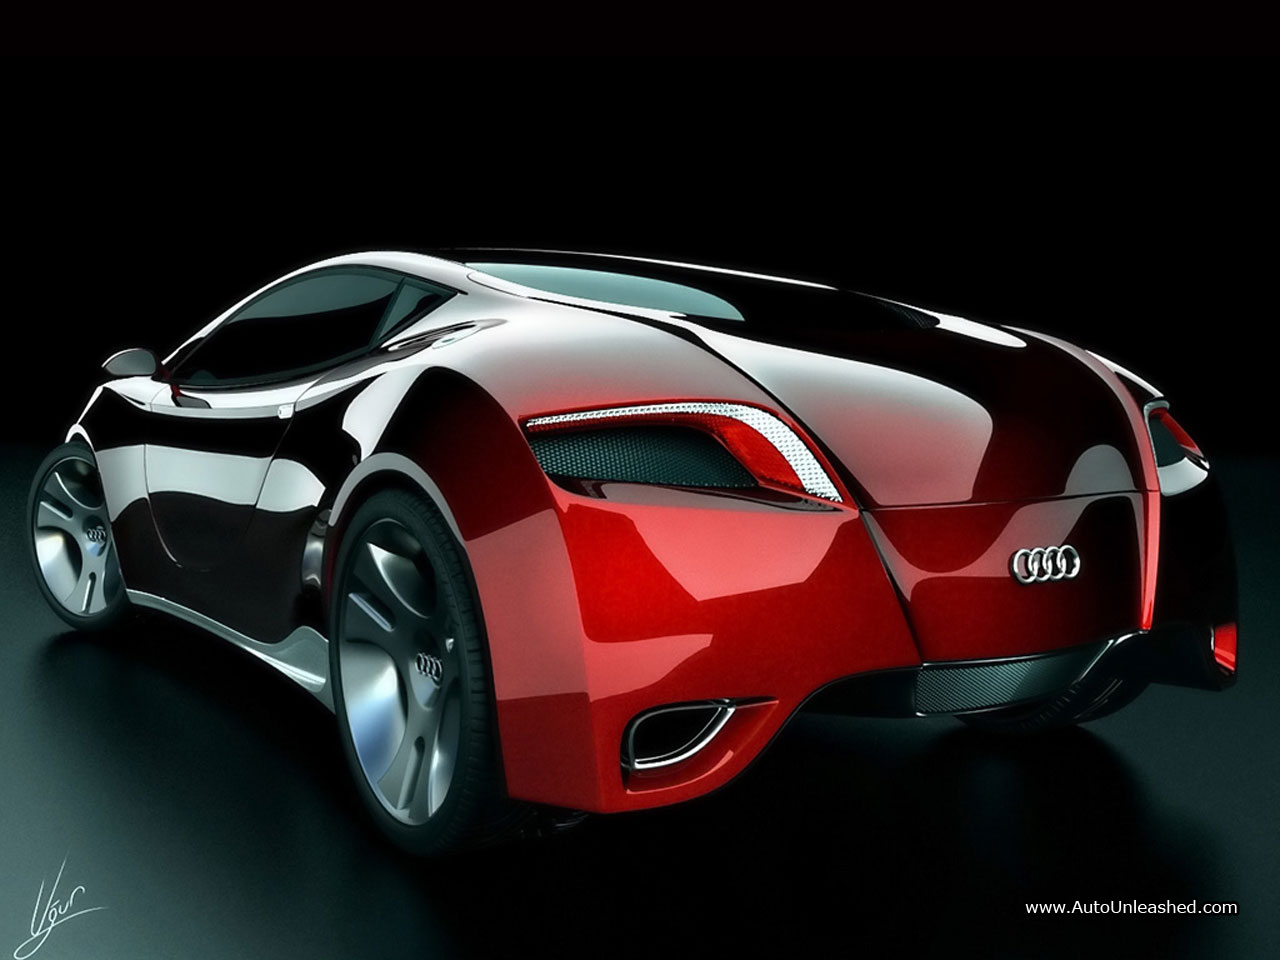 Download full size Audi wallpaper / Cars / 1280x960